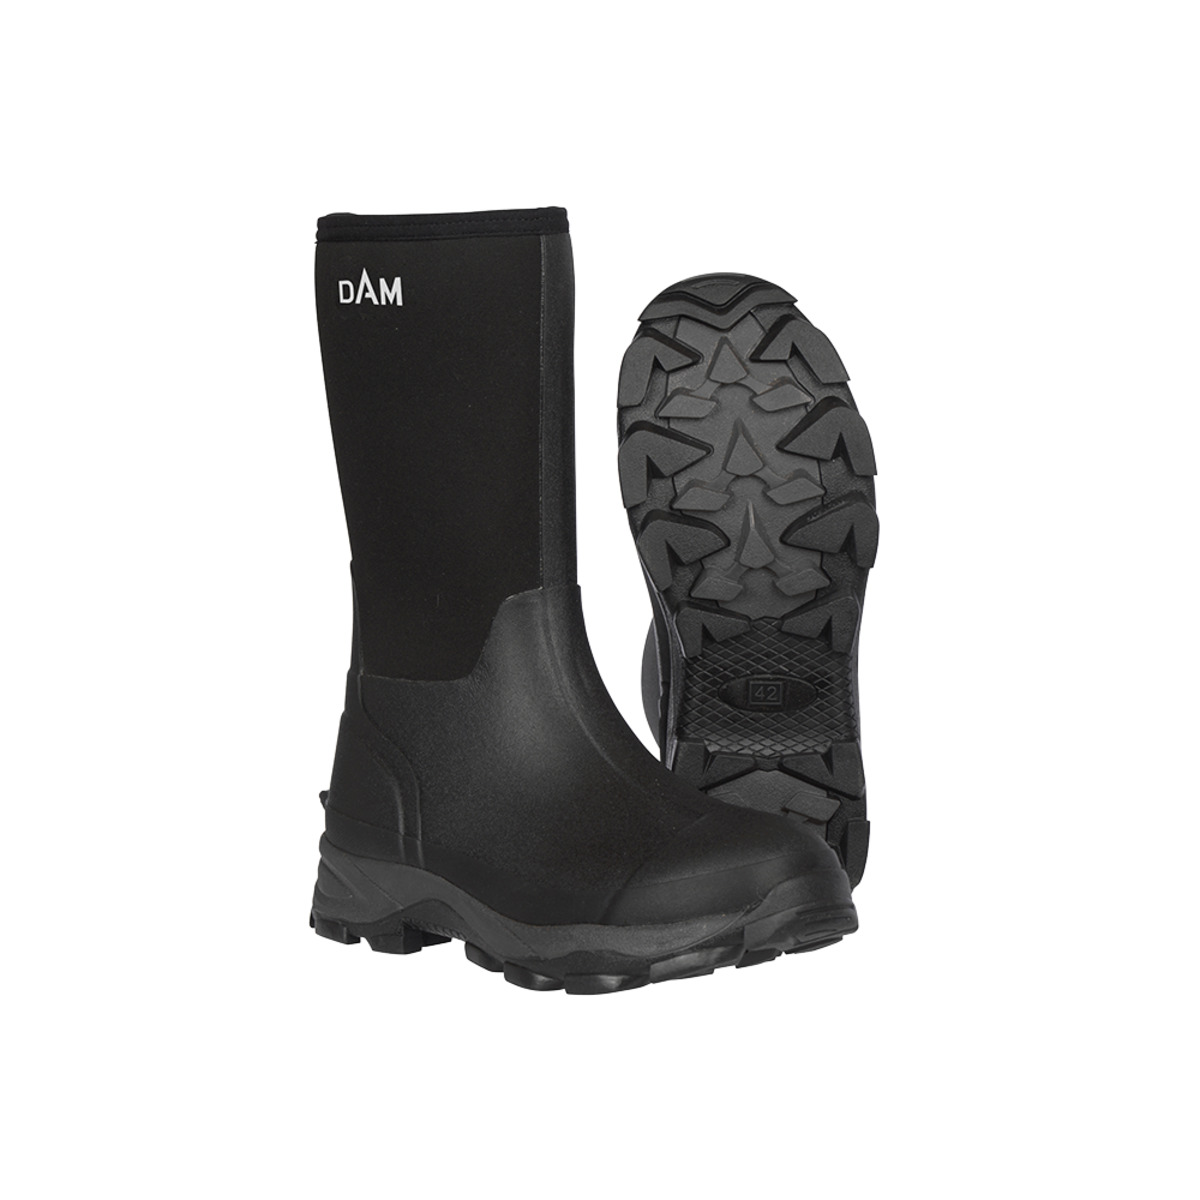 Dam Tira Boots Rubber/neoprene - 41/7 BLACK